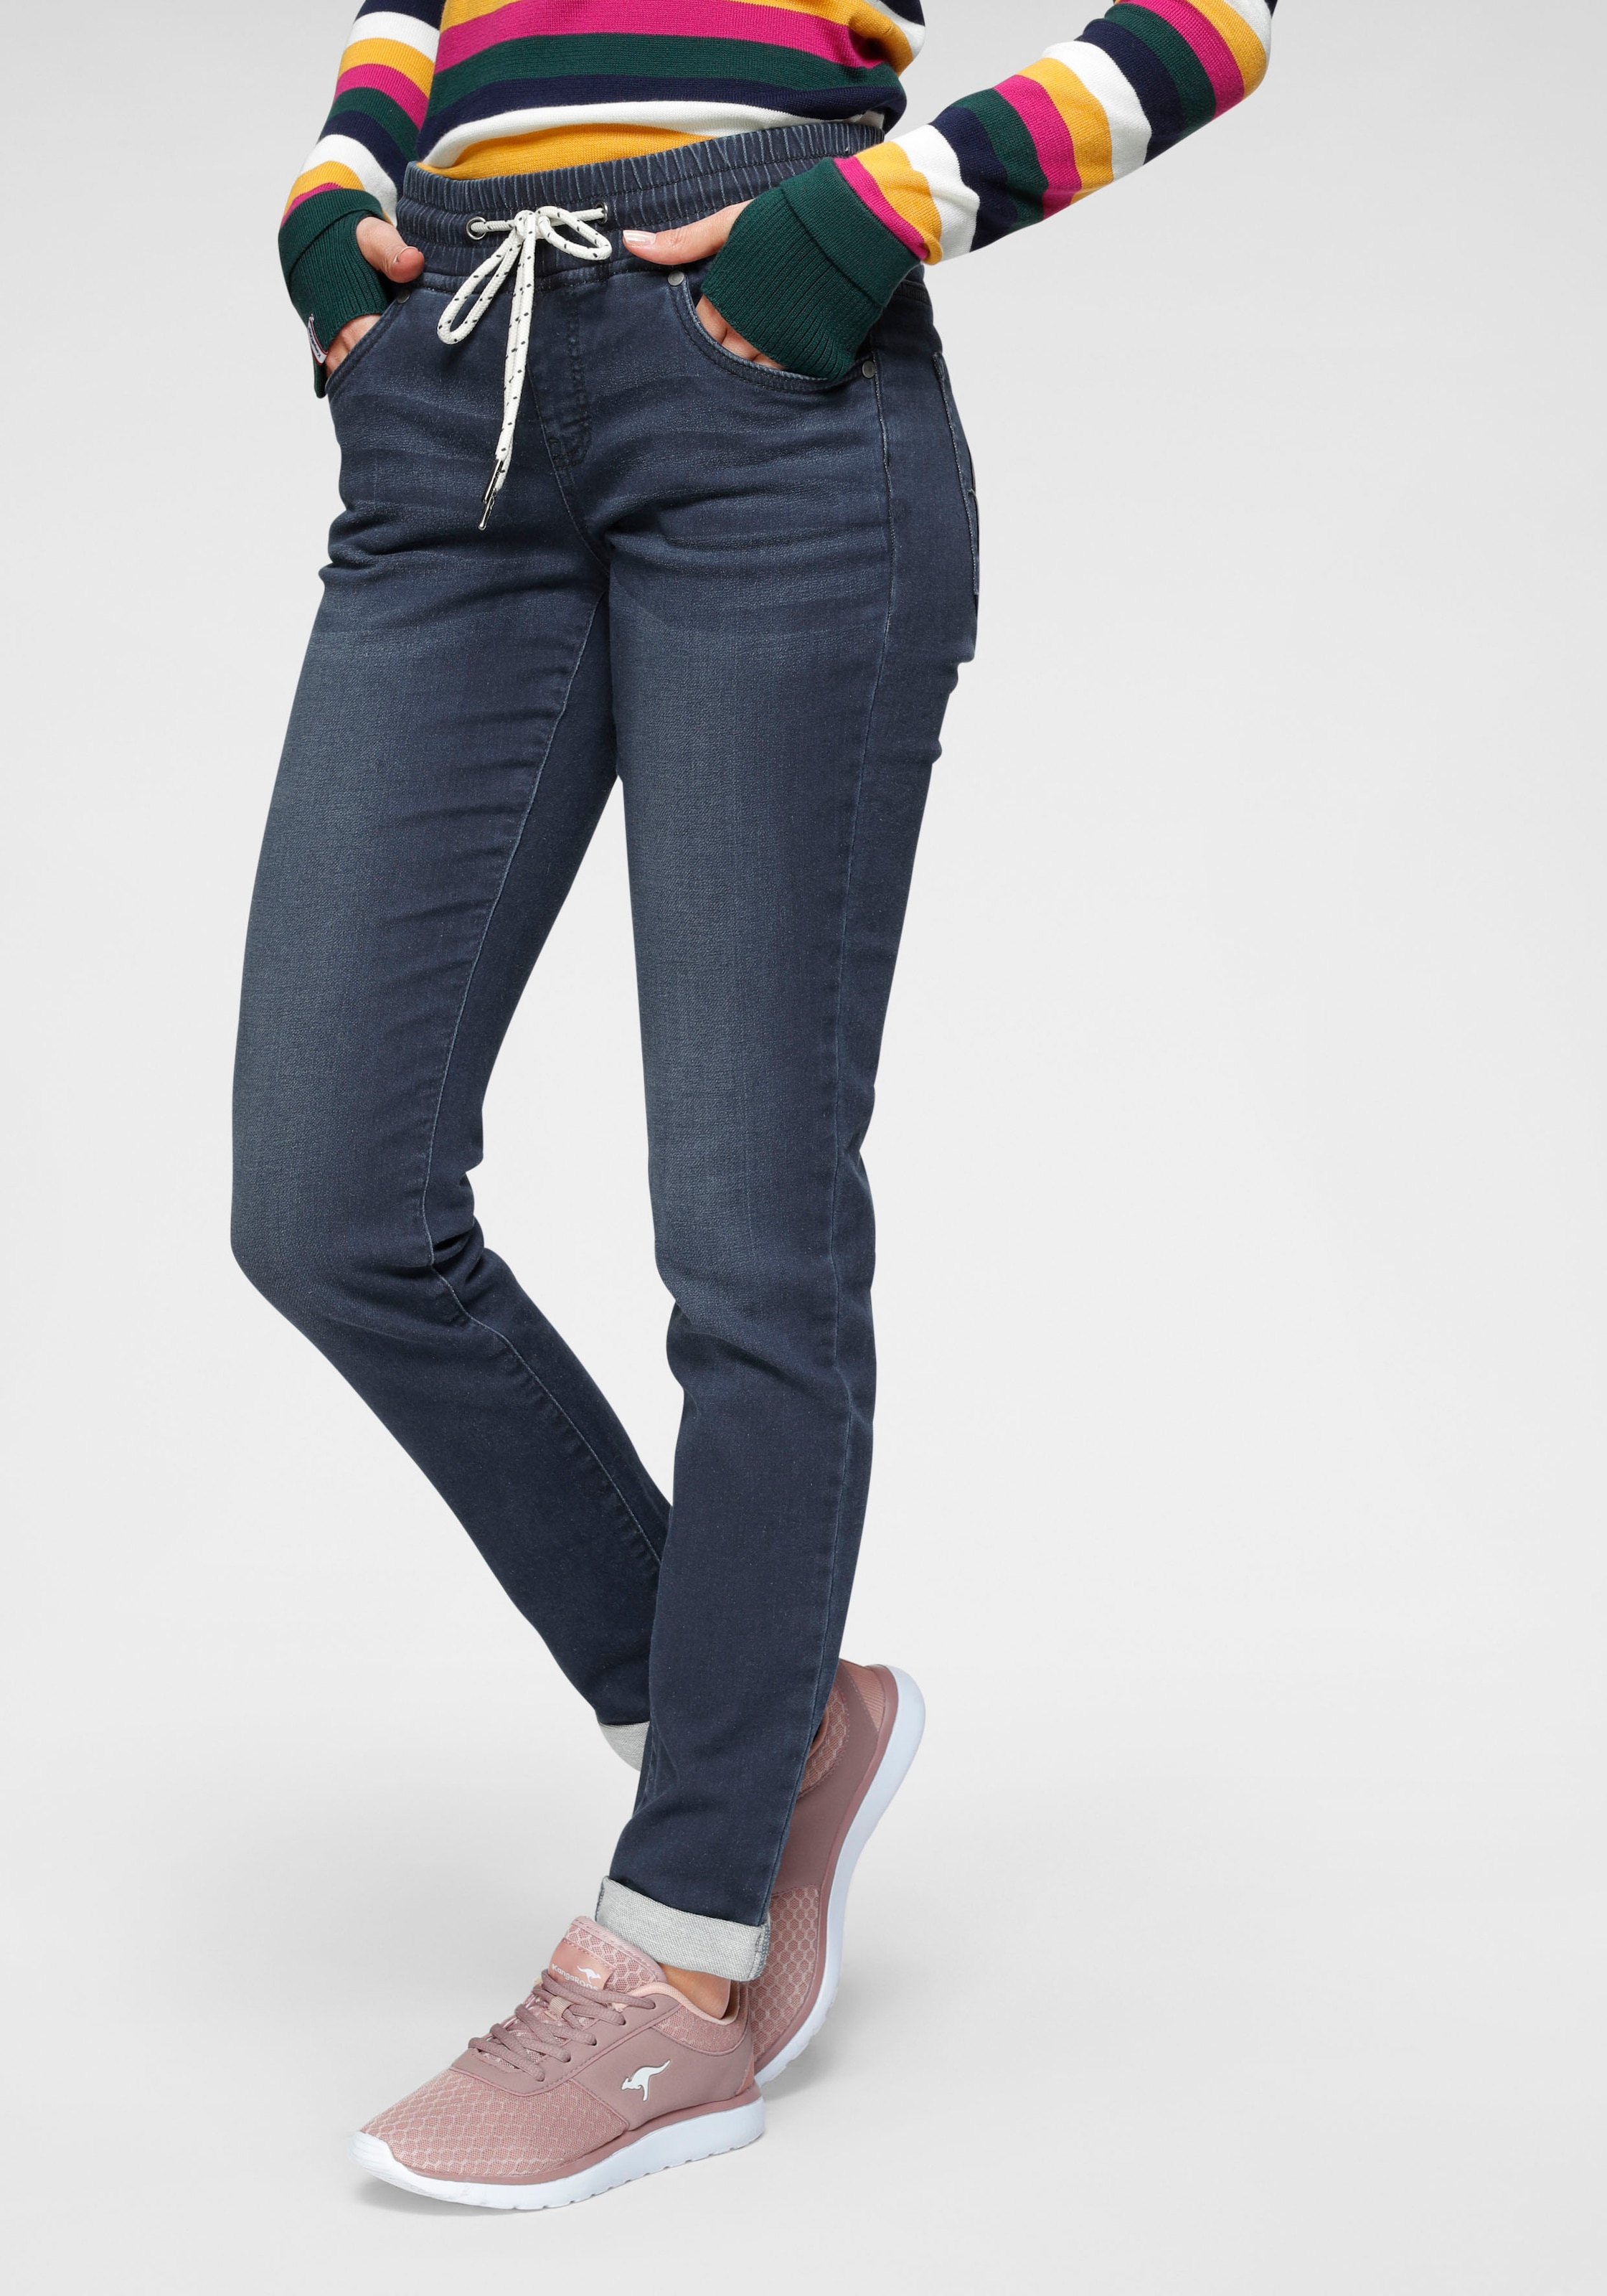 Bequeme Online-Shop Jeans bestellen im KangaROOS